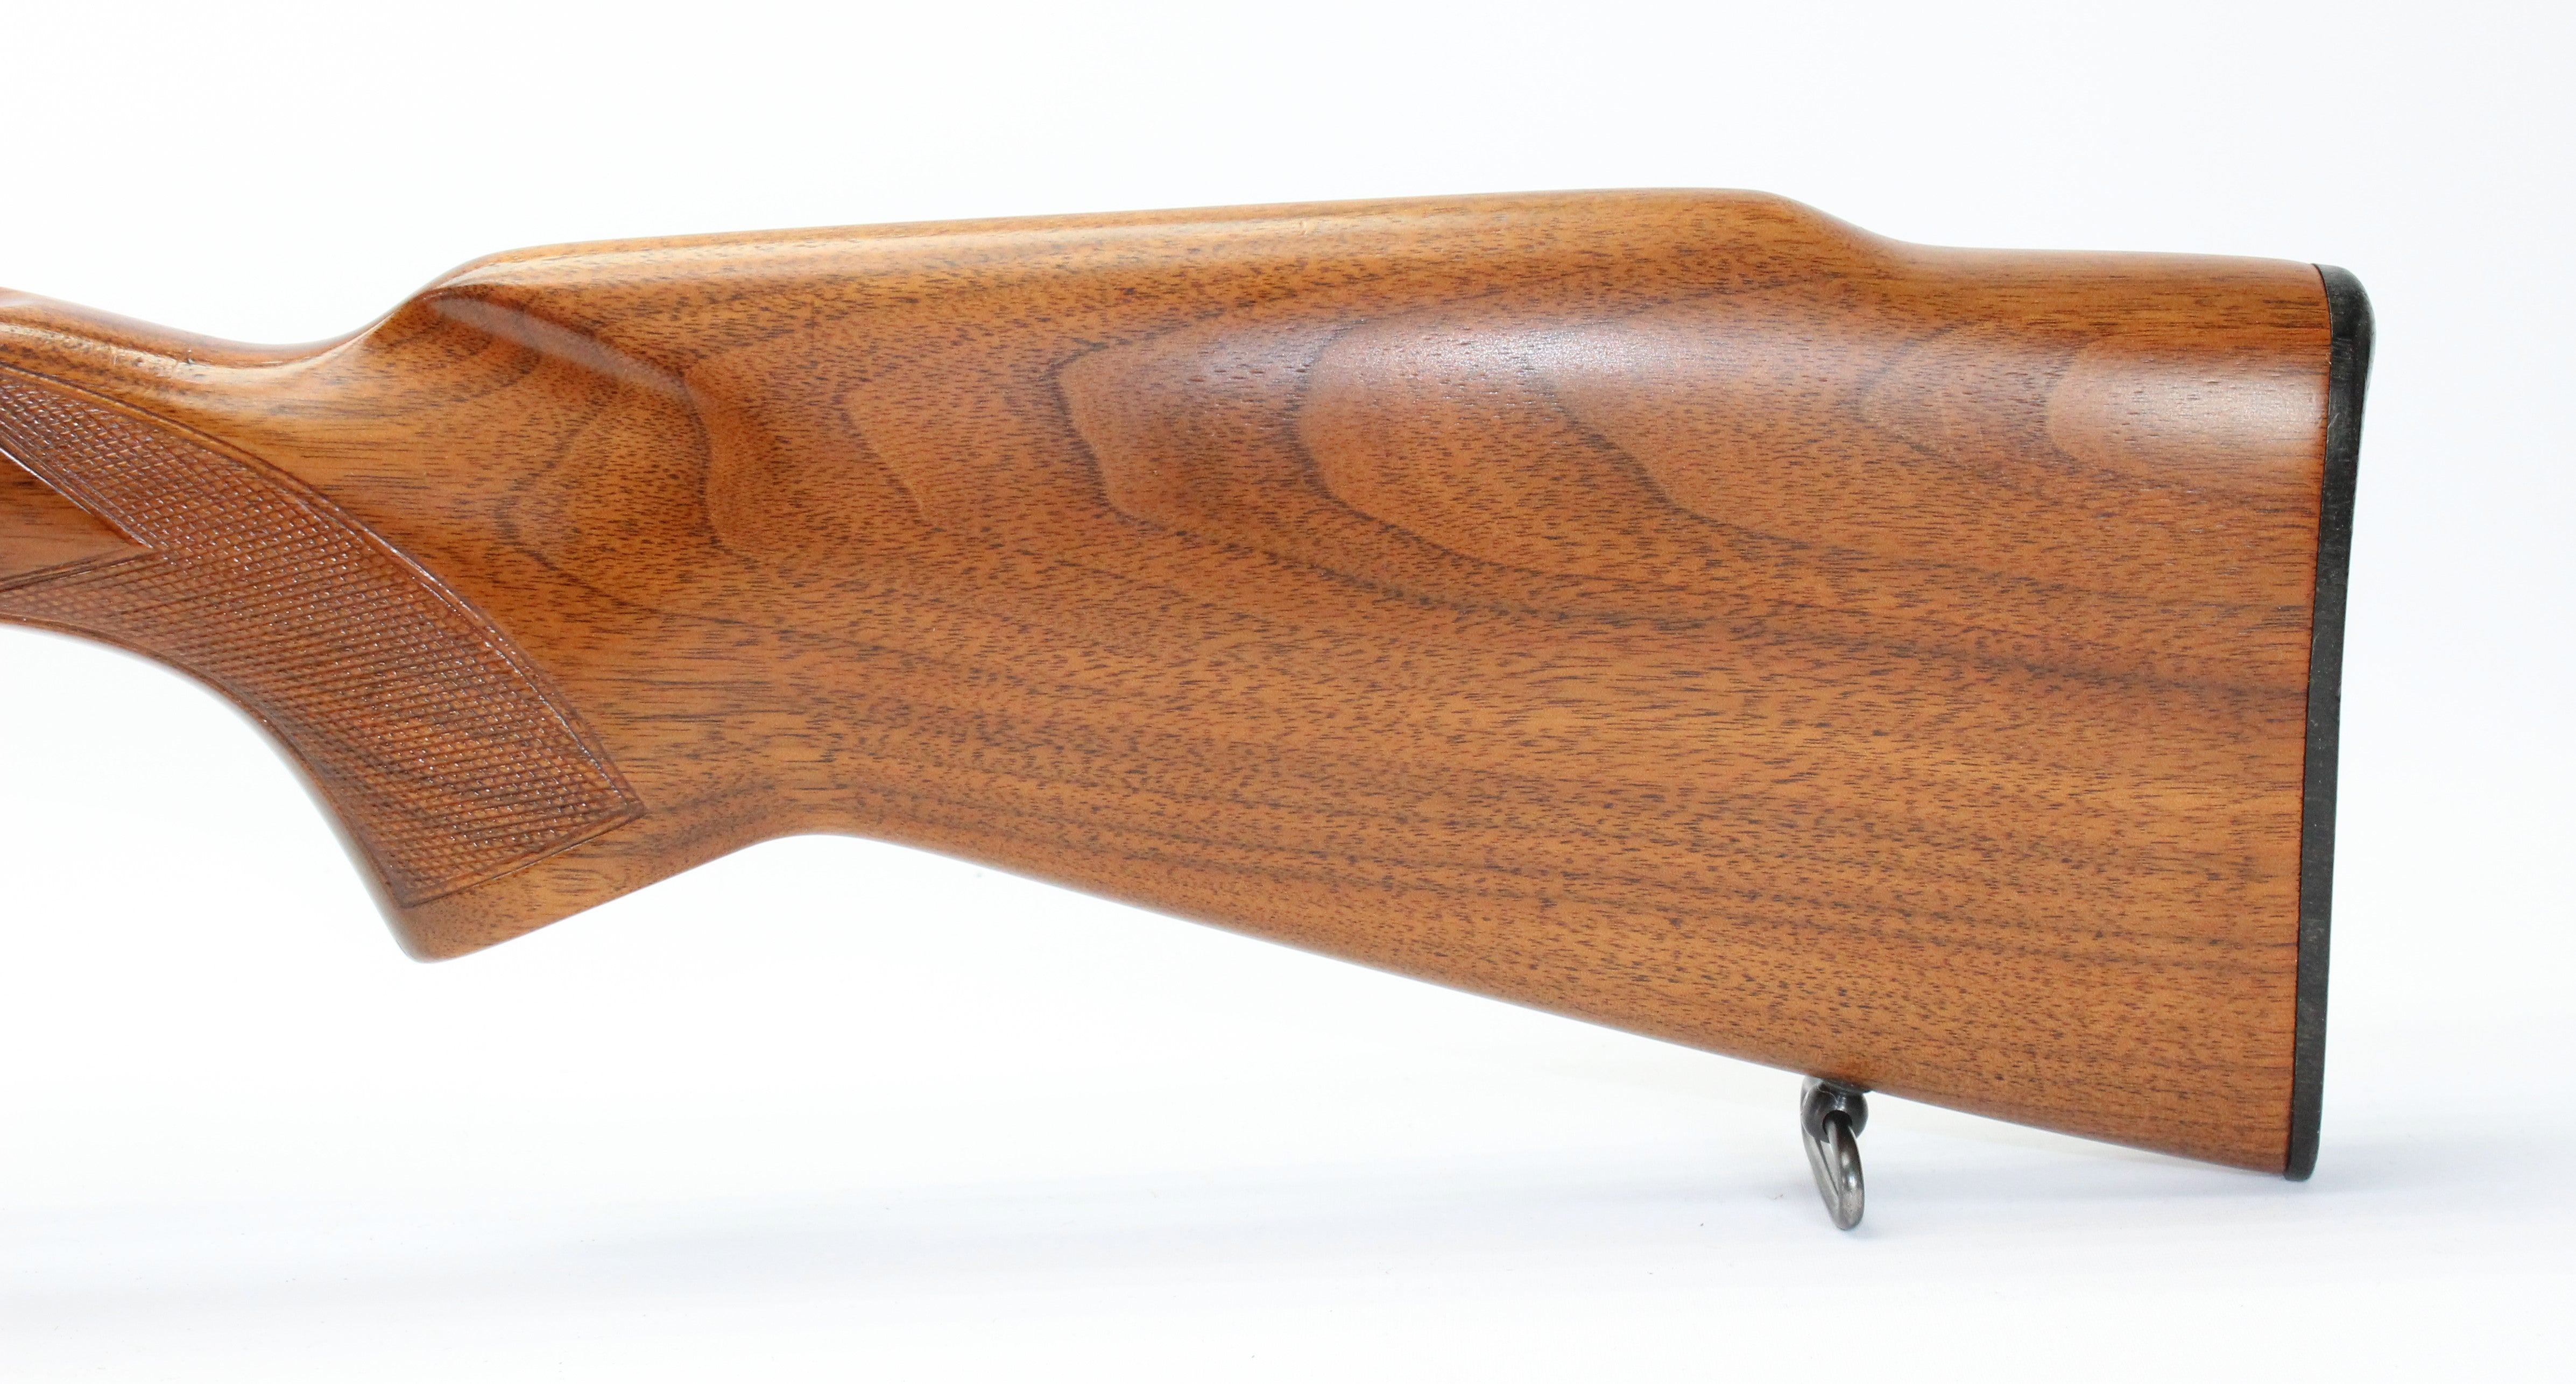 .300 H&H Magnum Standard Rifle - 1962